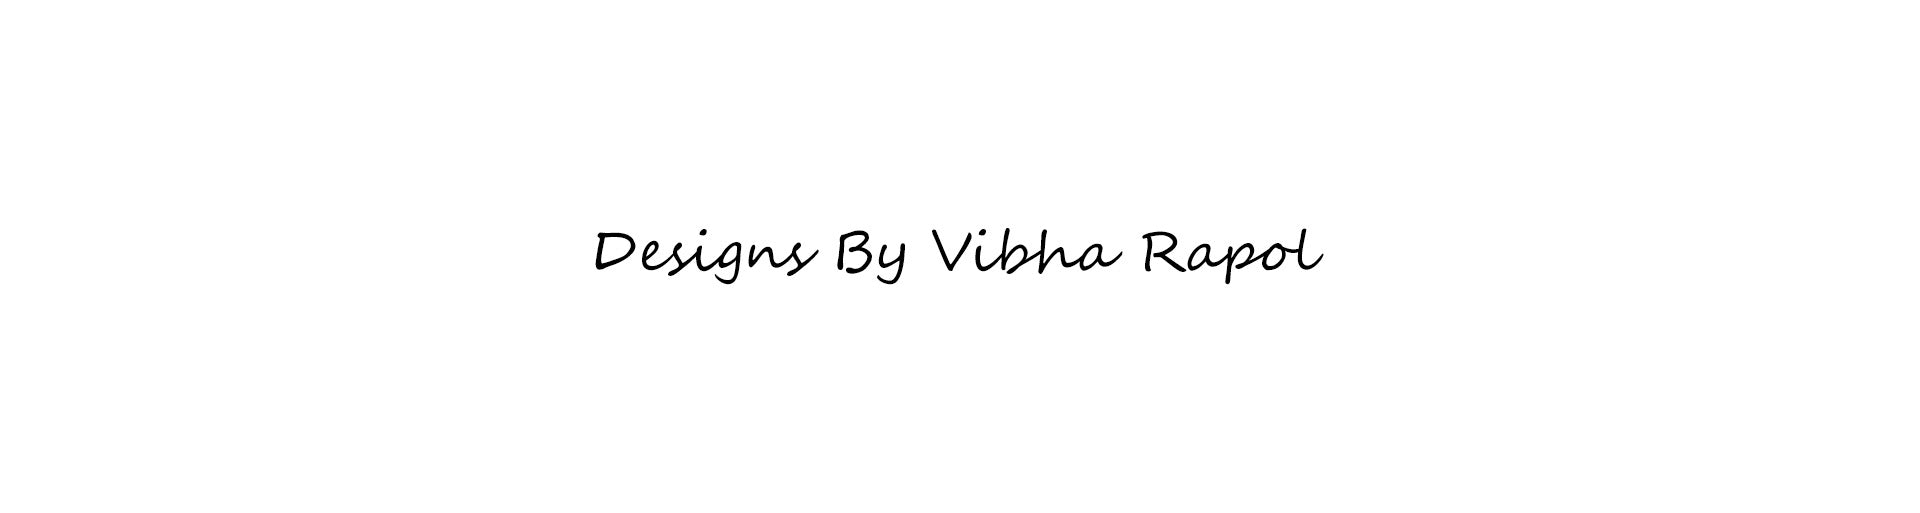 Vibha Rapol